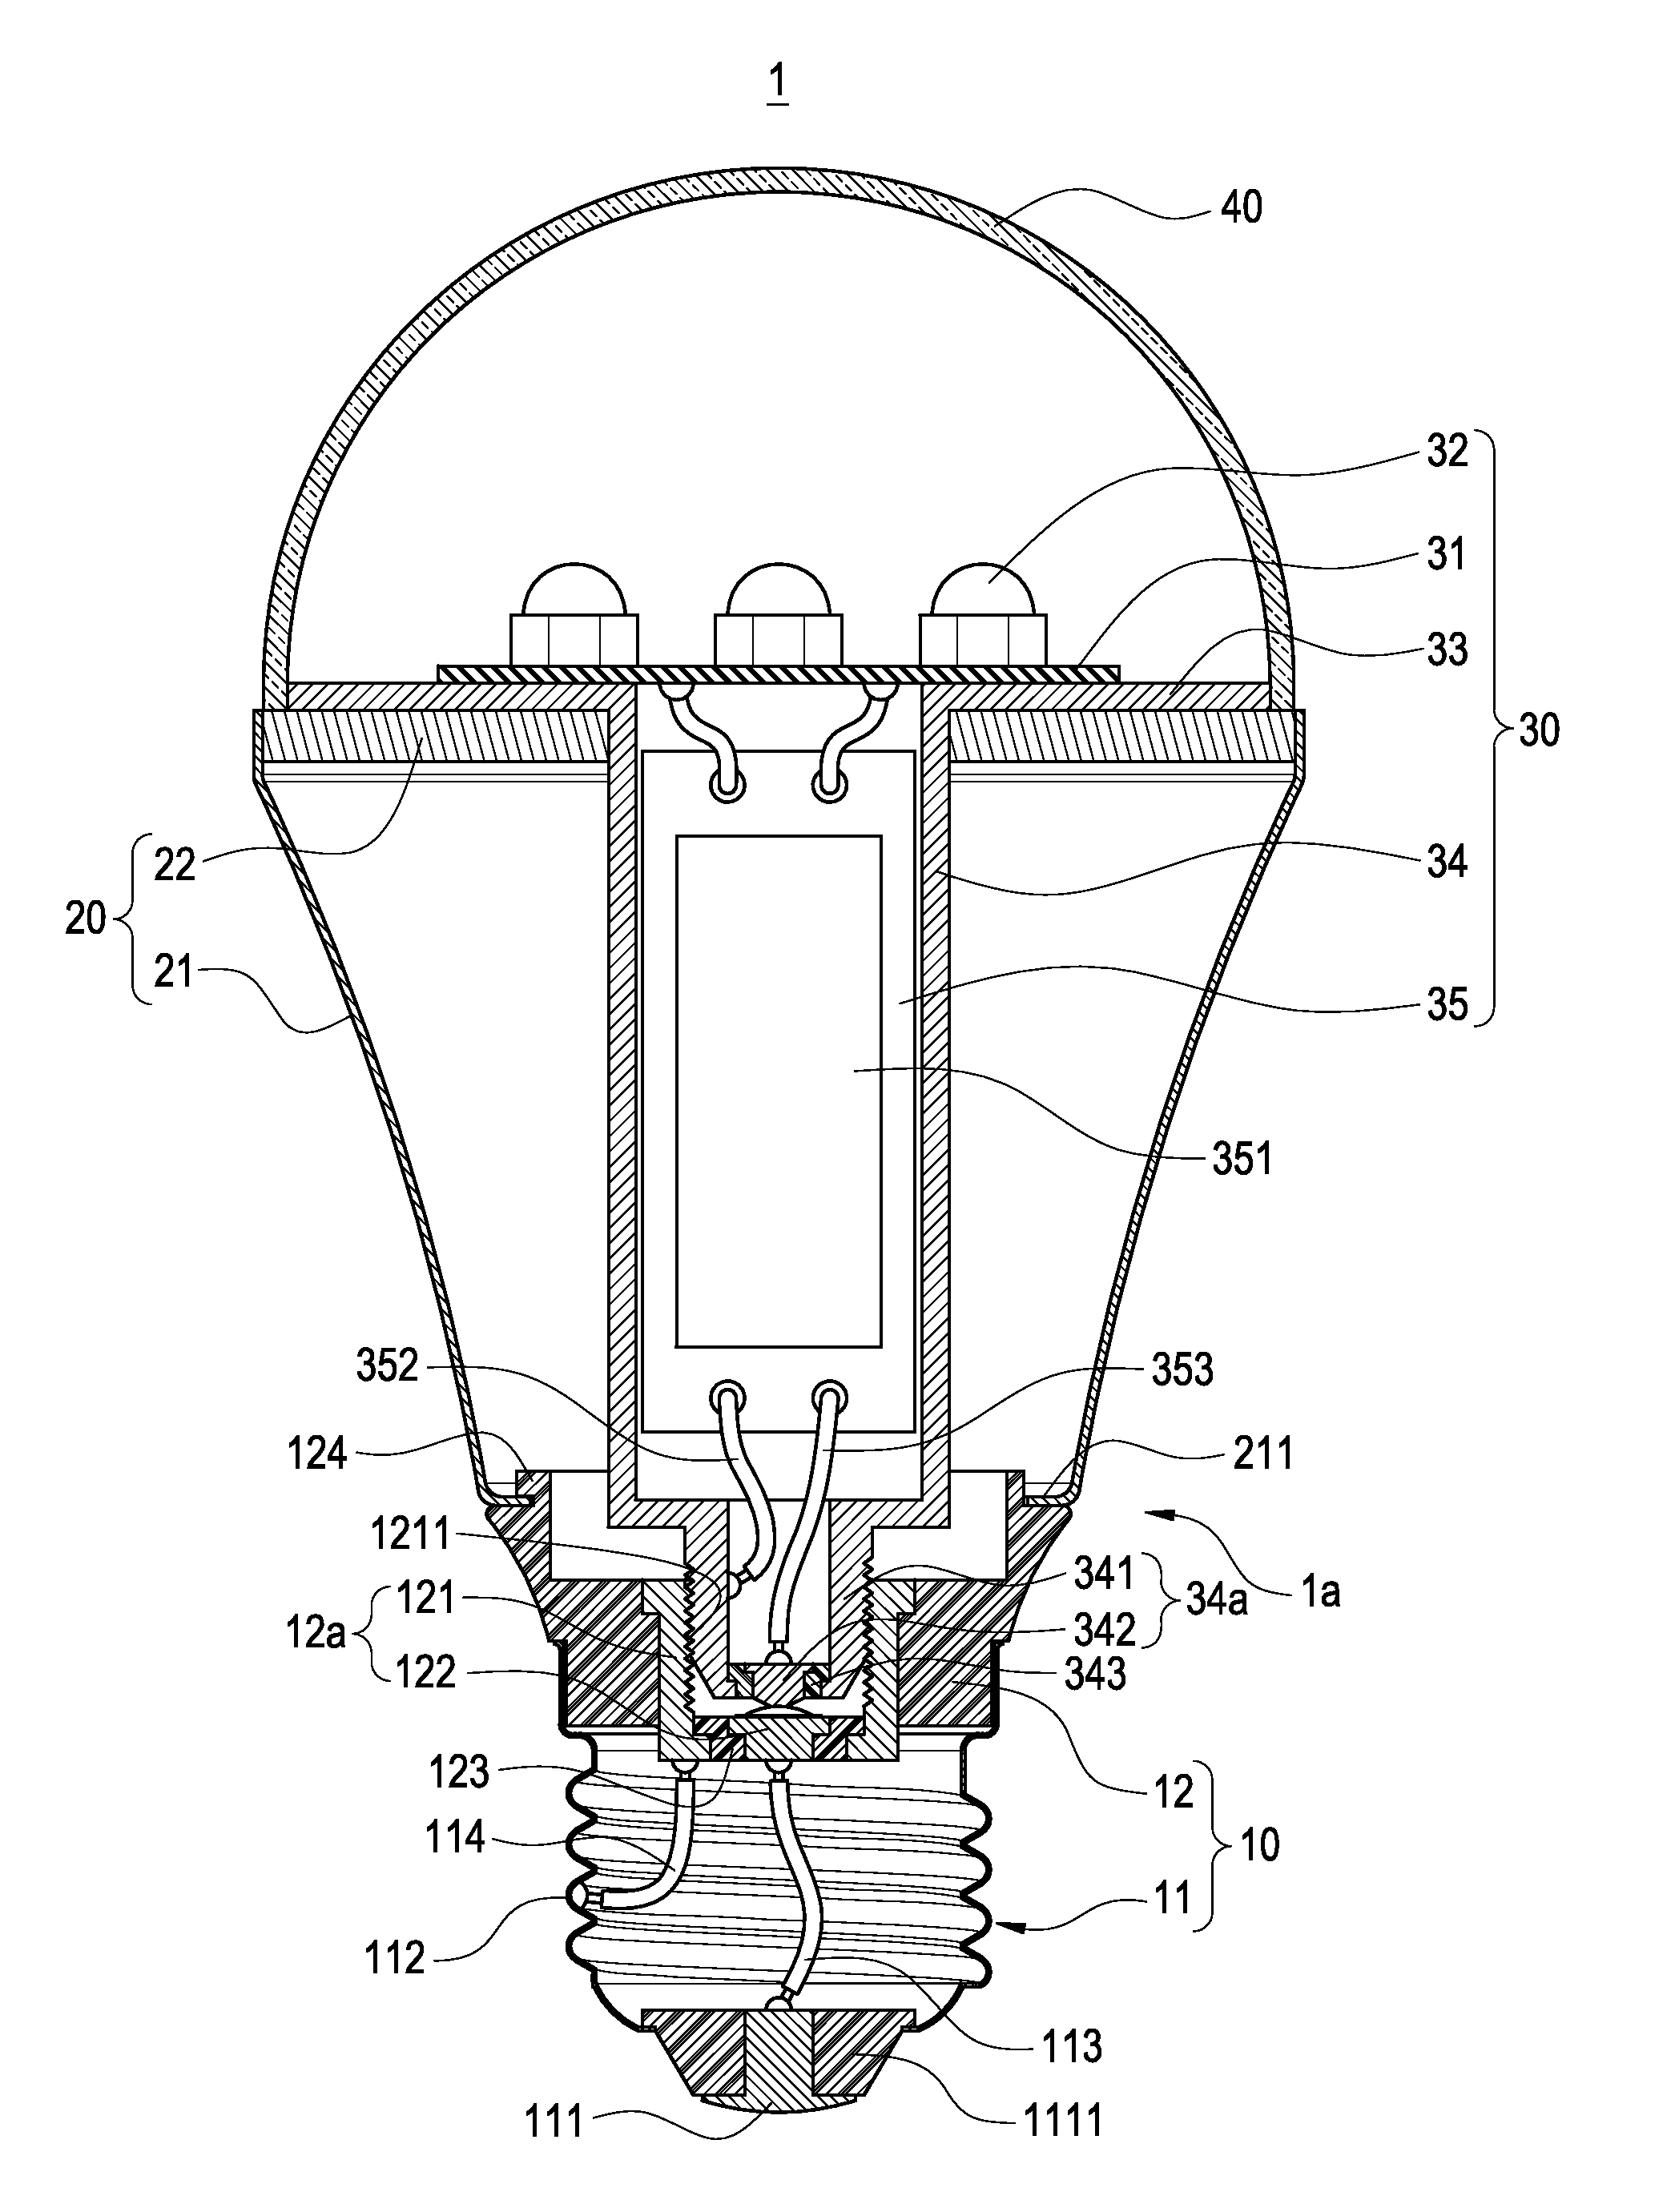 Bulb-type LED lamp having replaceable light source module